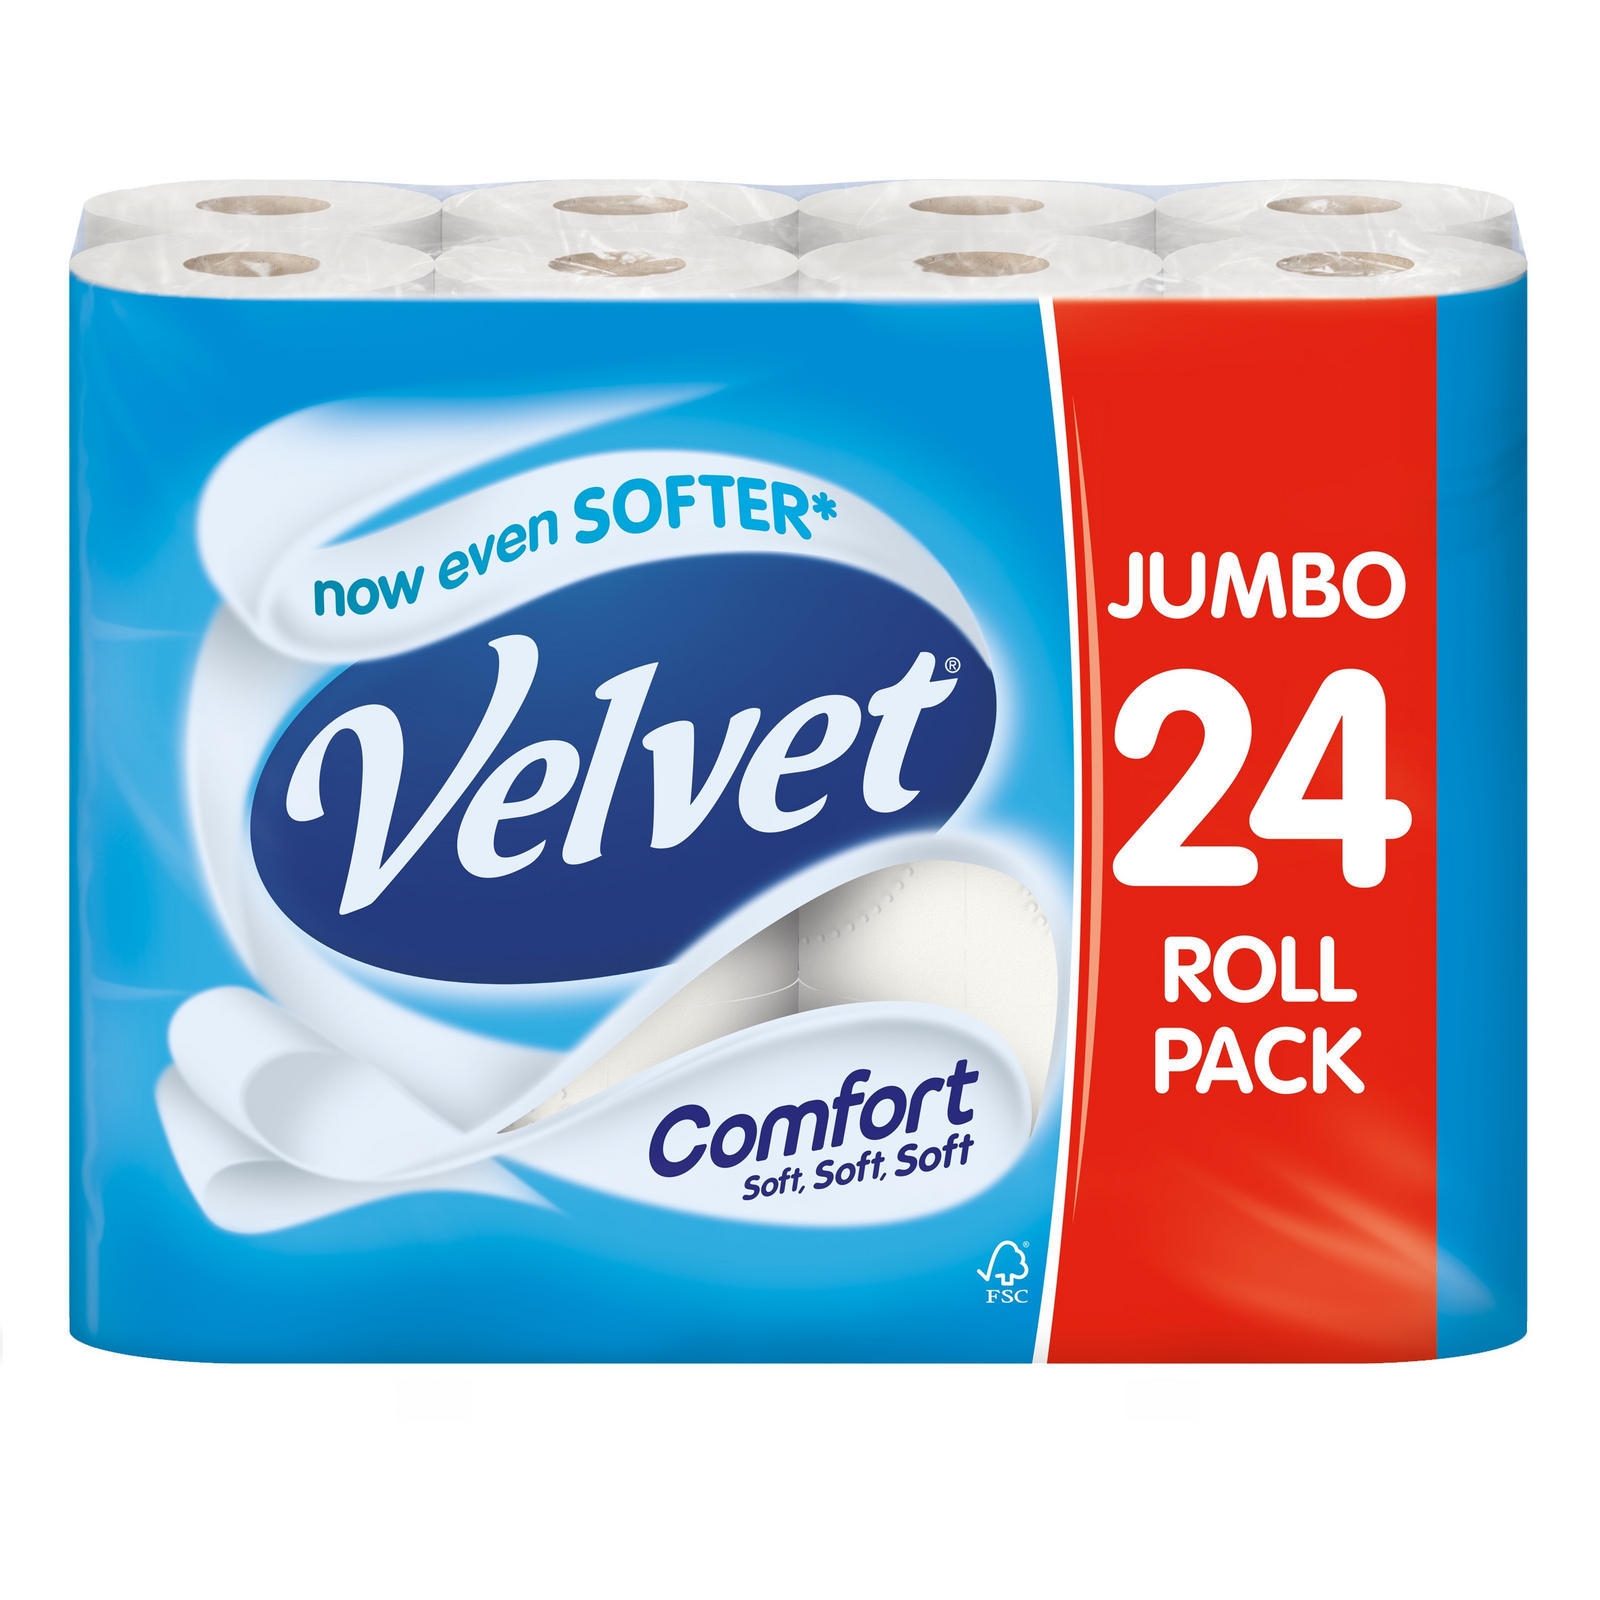 Velvet Comfort Toilet Rolls, 2 ply, x 24 rolls